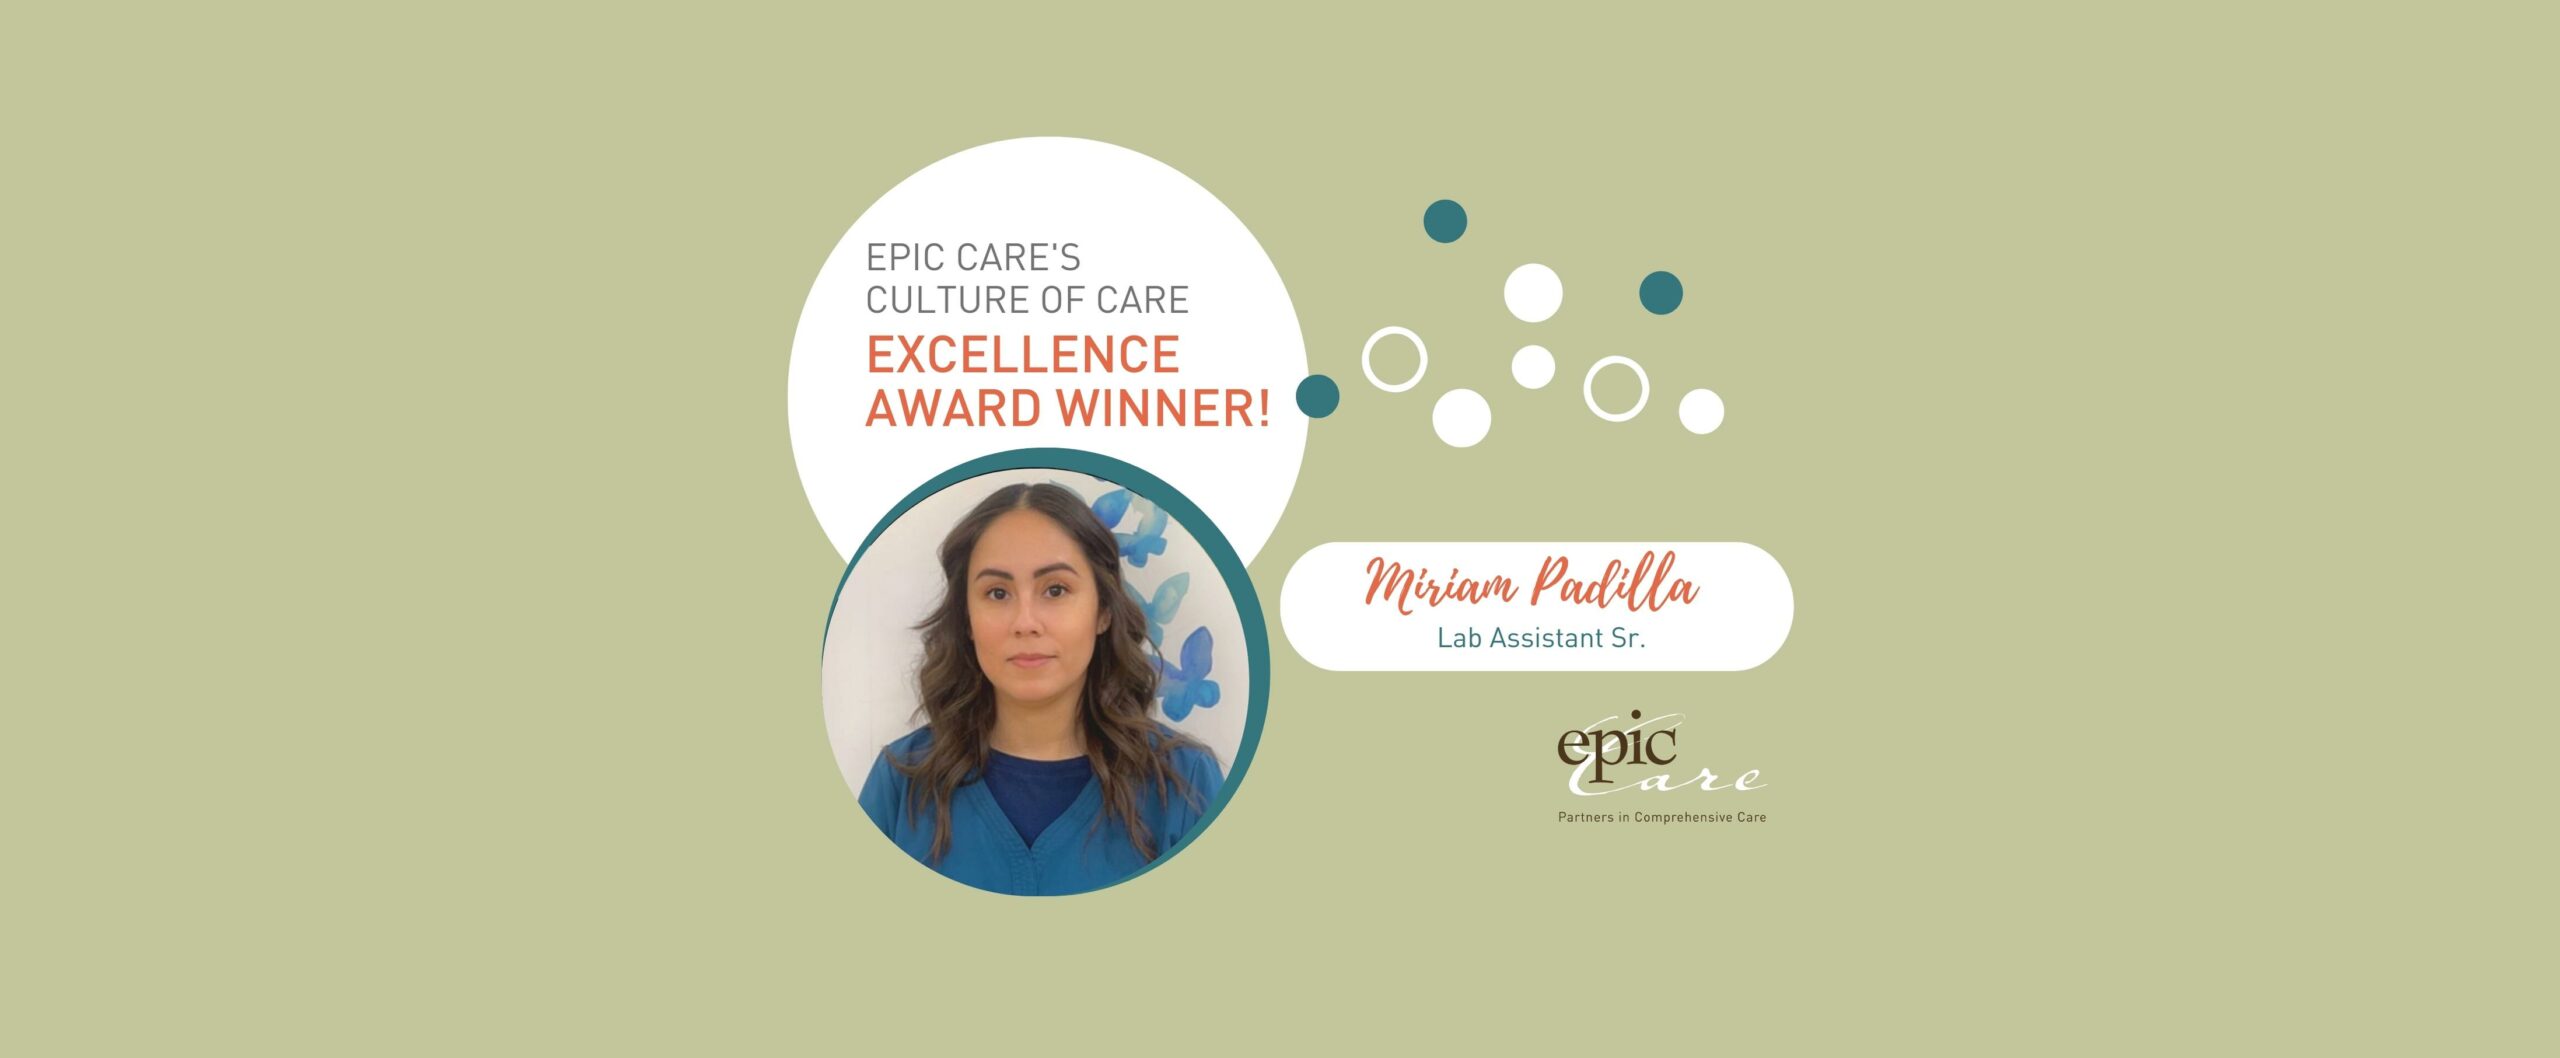 Epic Care’s Culture of CARE Excellence Award Winner! – Miriam Padilla